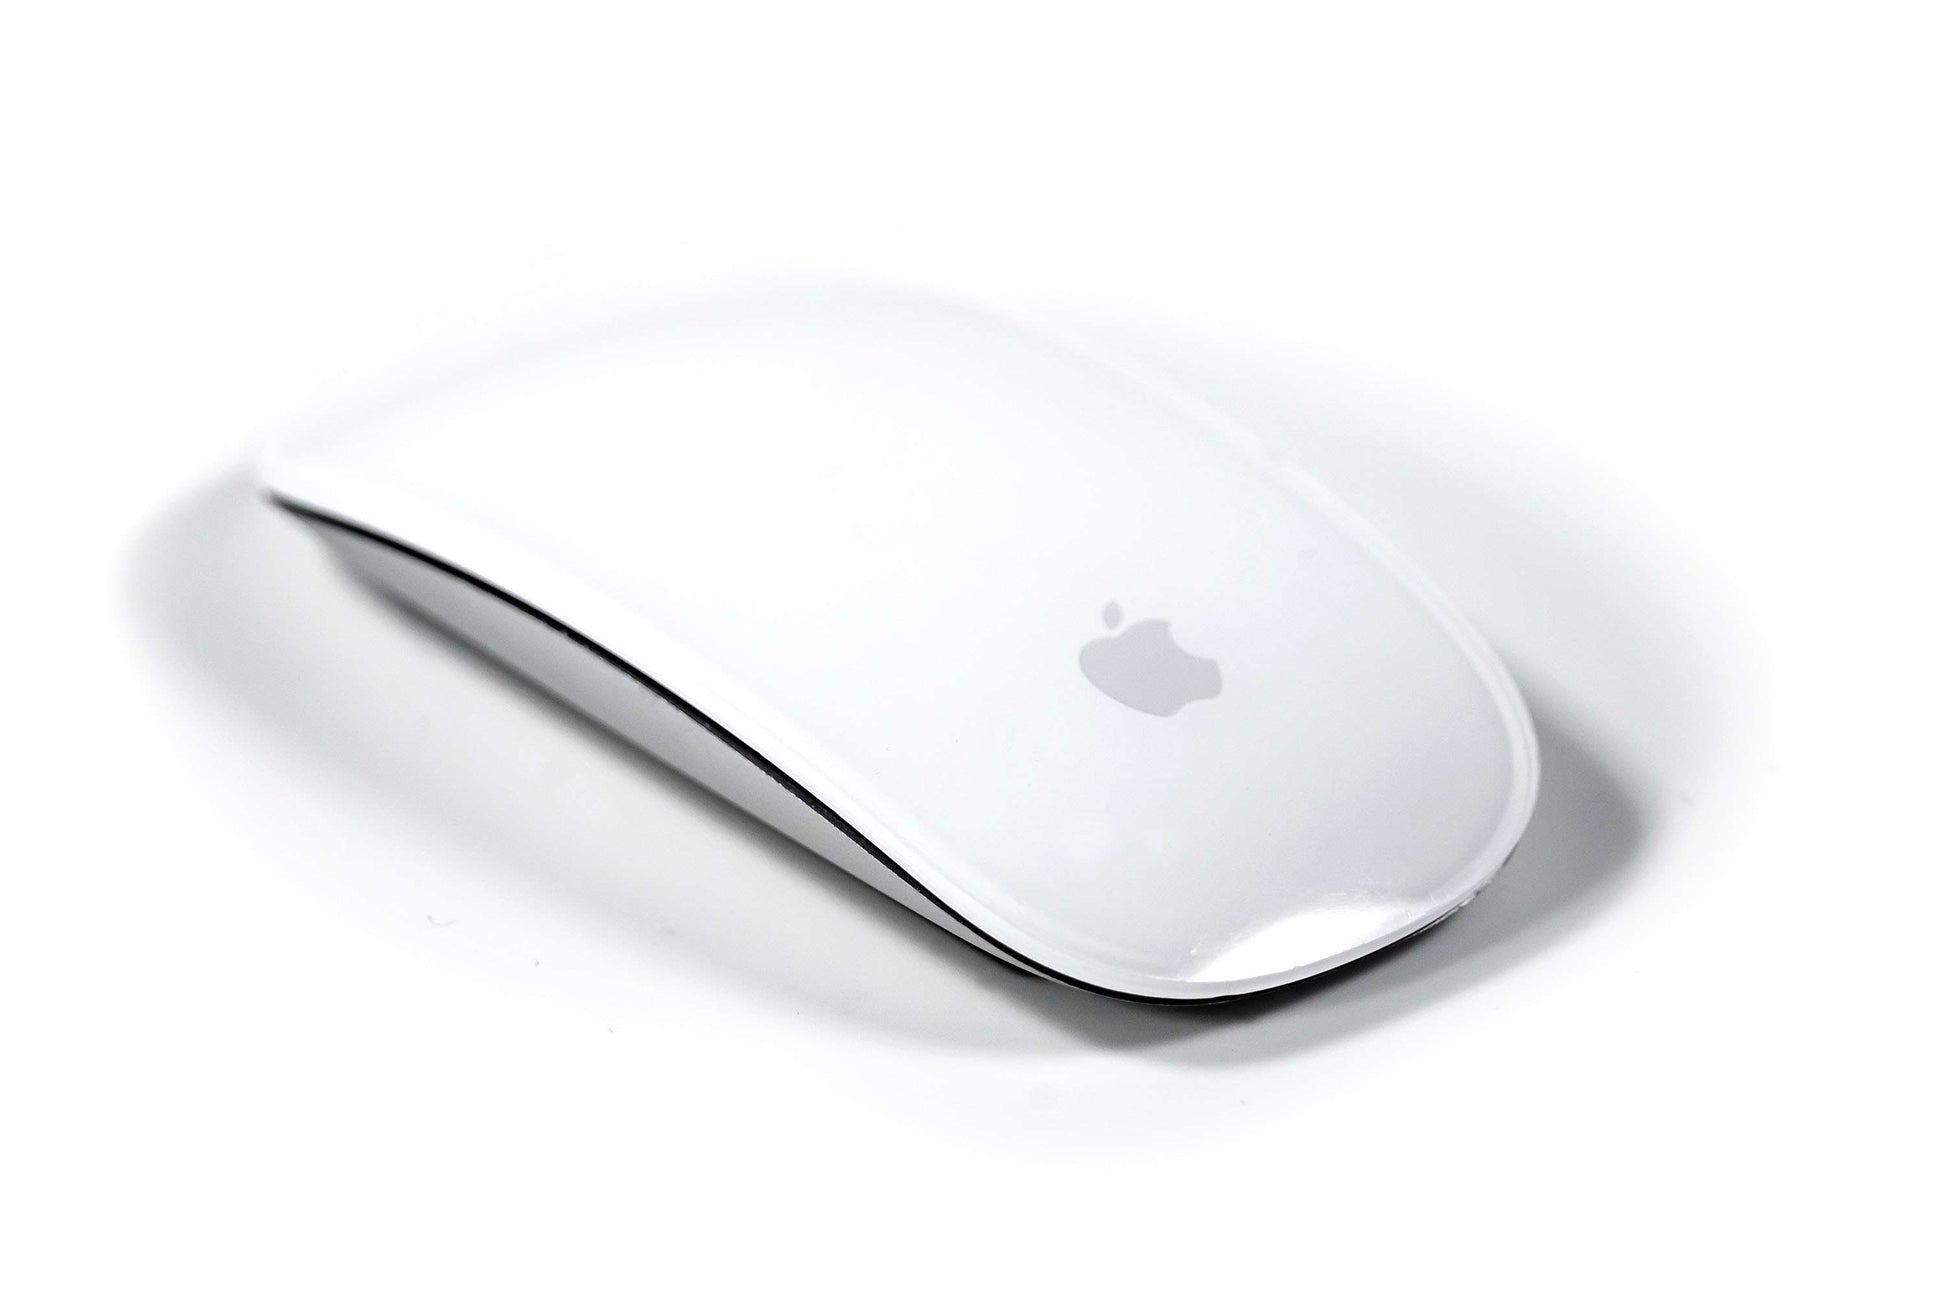 Apple iMac 4K 21.5-inch (Mid 2017) 3.4GHz i5 1TB SSD Fusion Drive 32GB RAM All-In-One Desktop